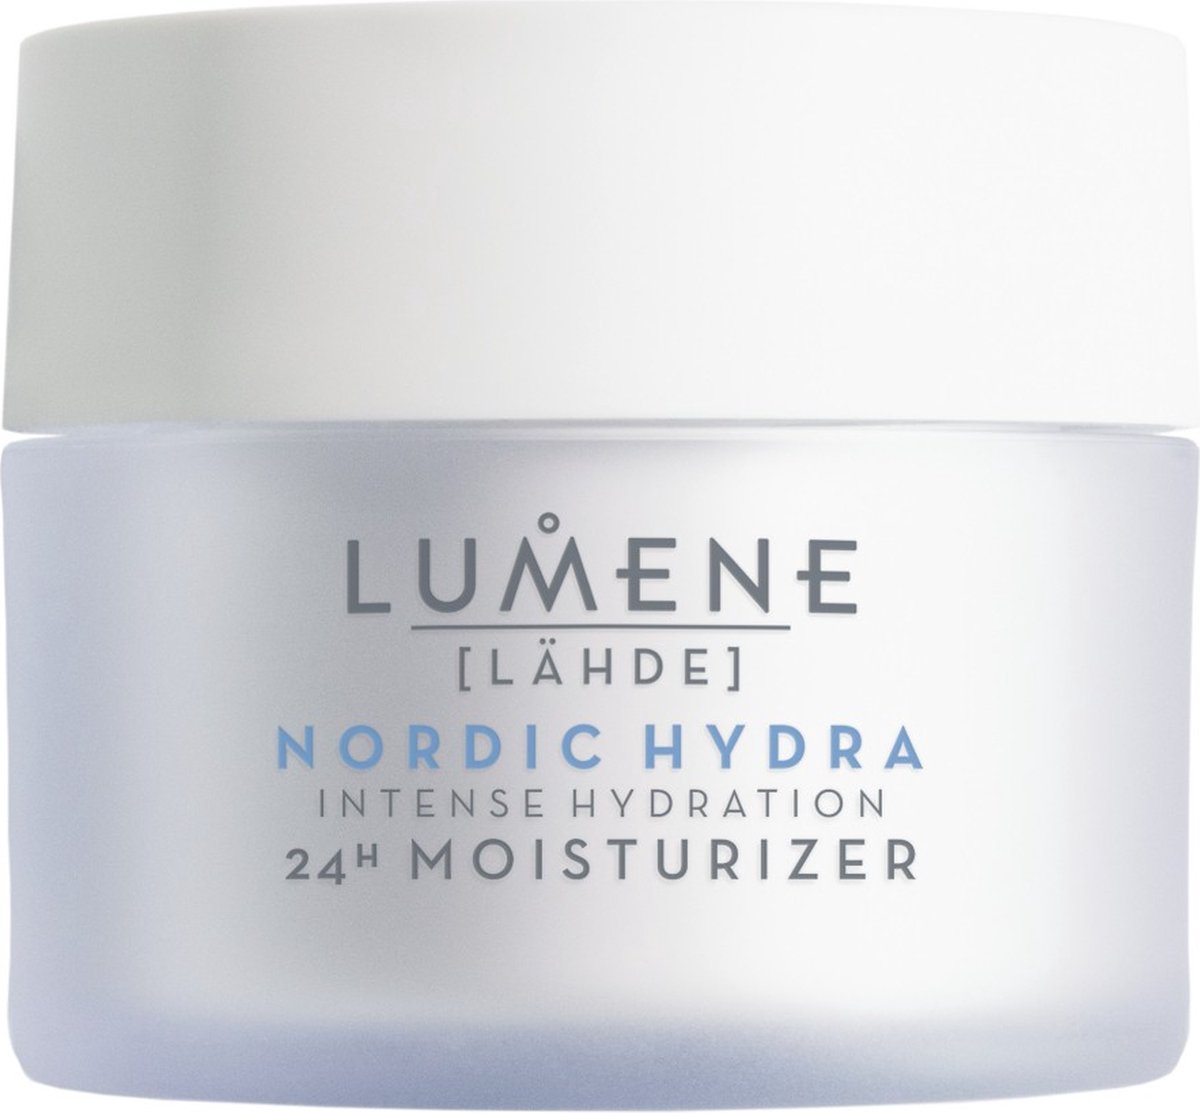 Lumene Nordic Hydra [lahde] Intense Hydration 24h Moisturizer 50 Ml